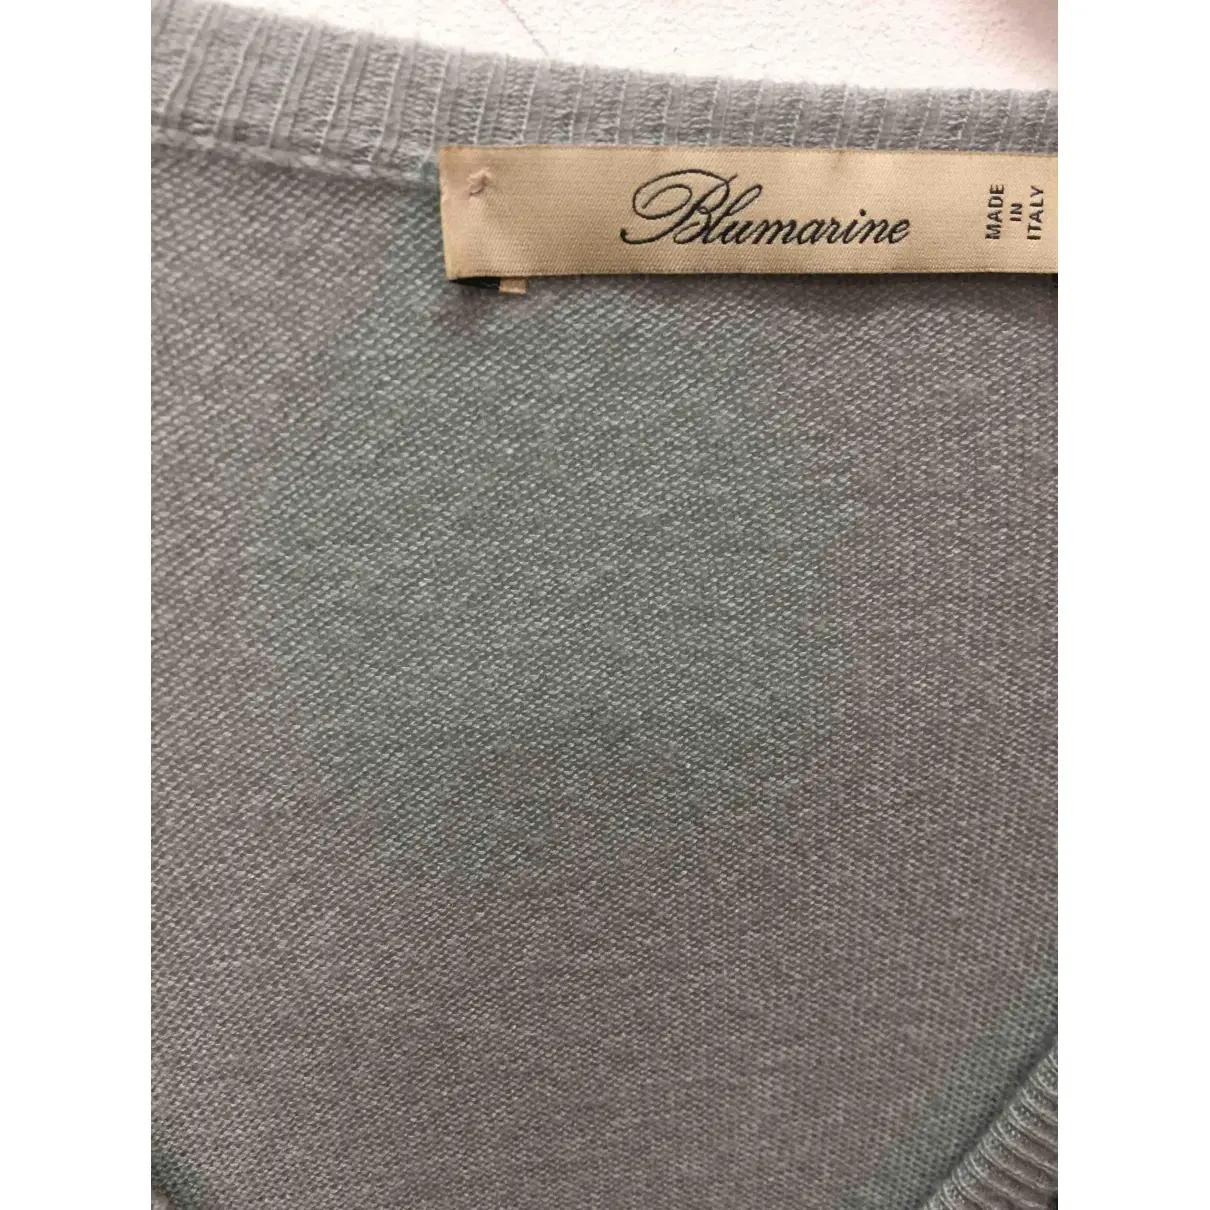 Buy Blumarine Cashmere cardigan online